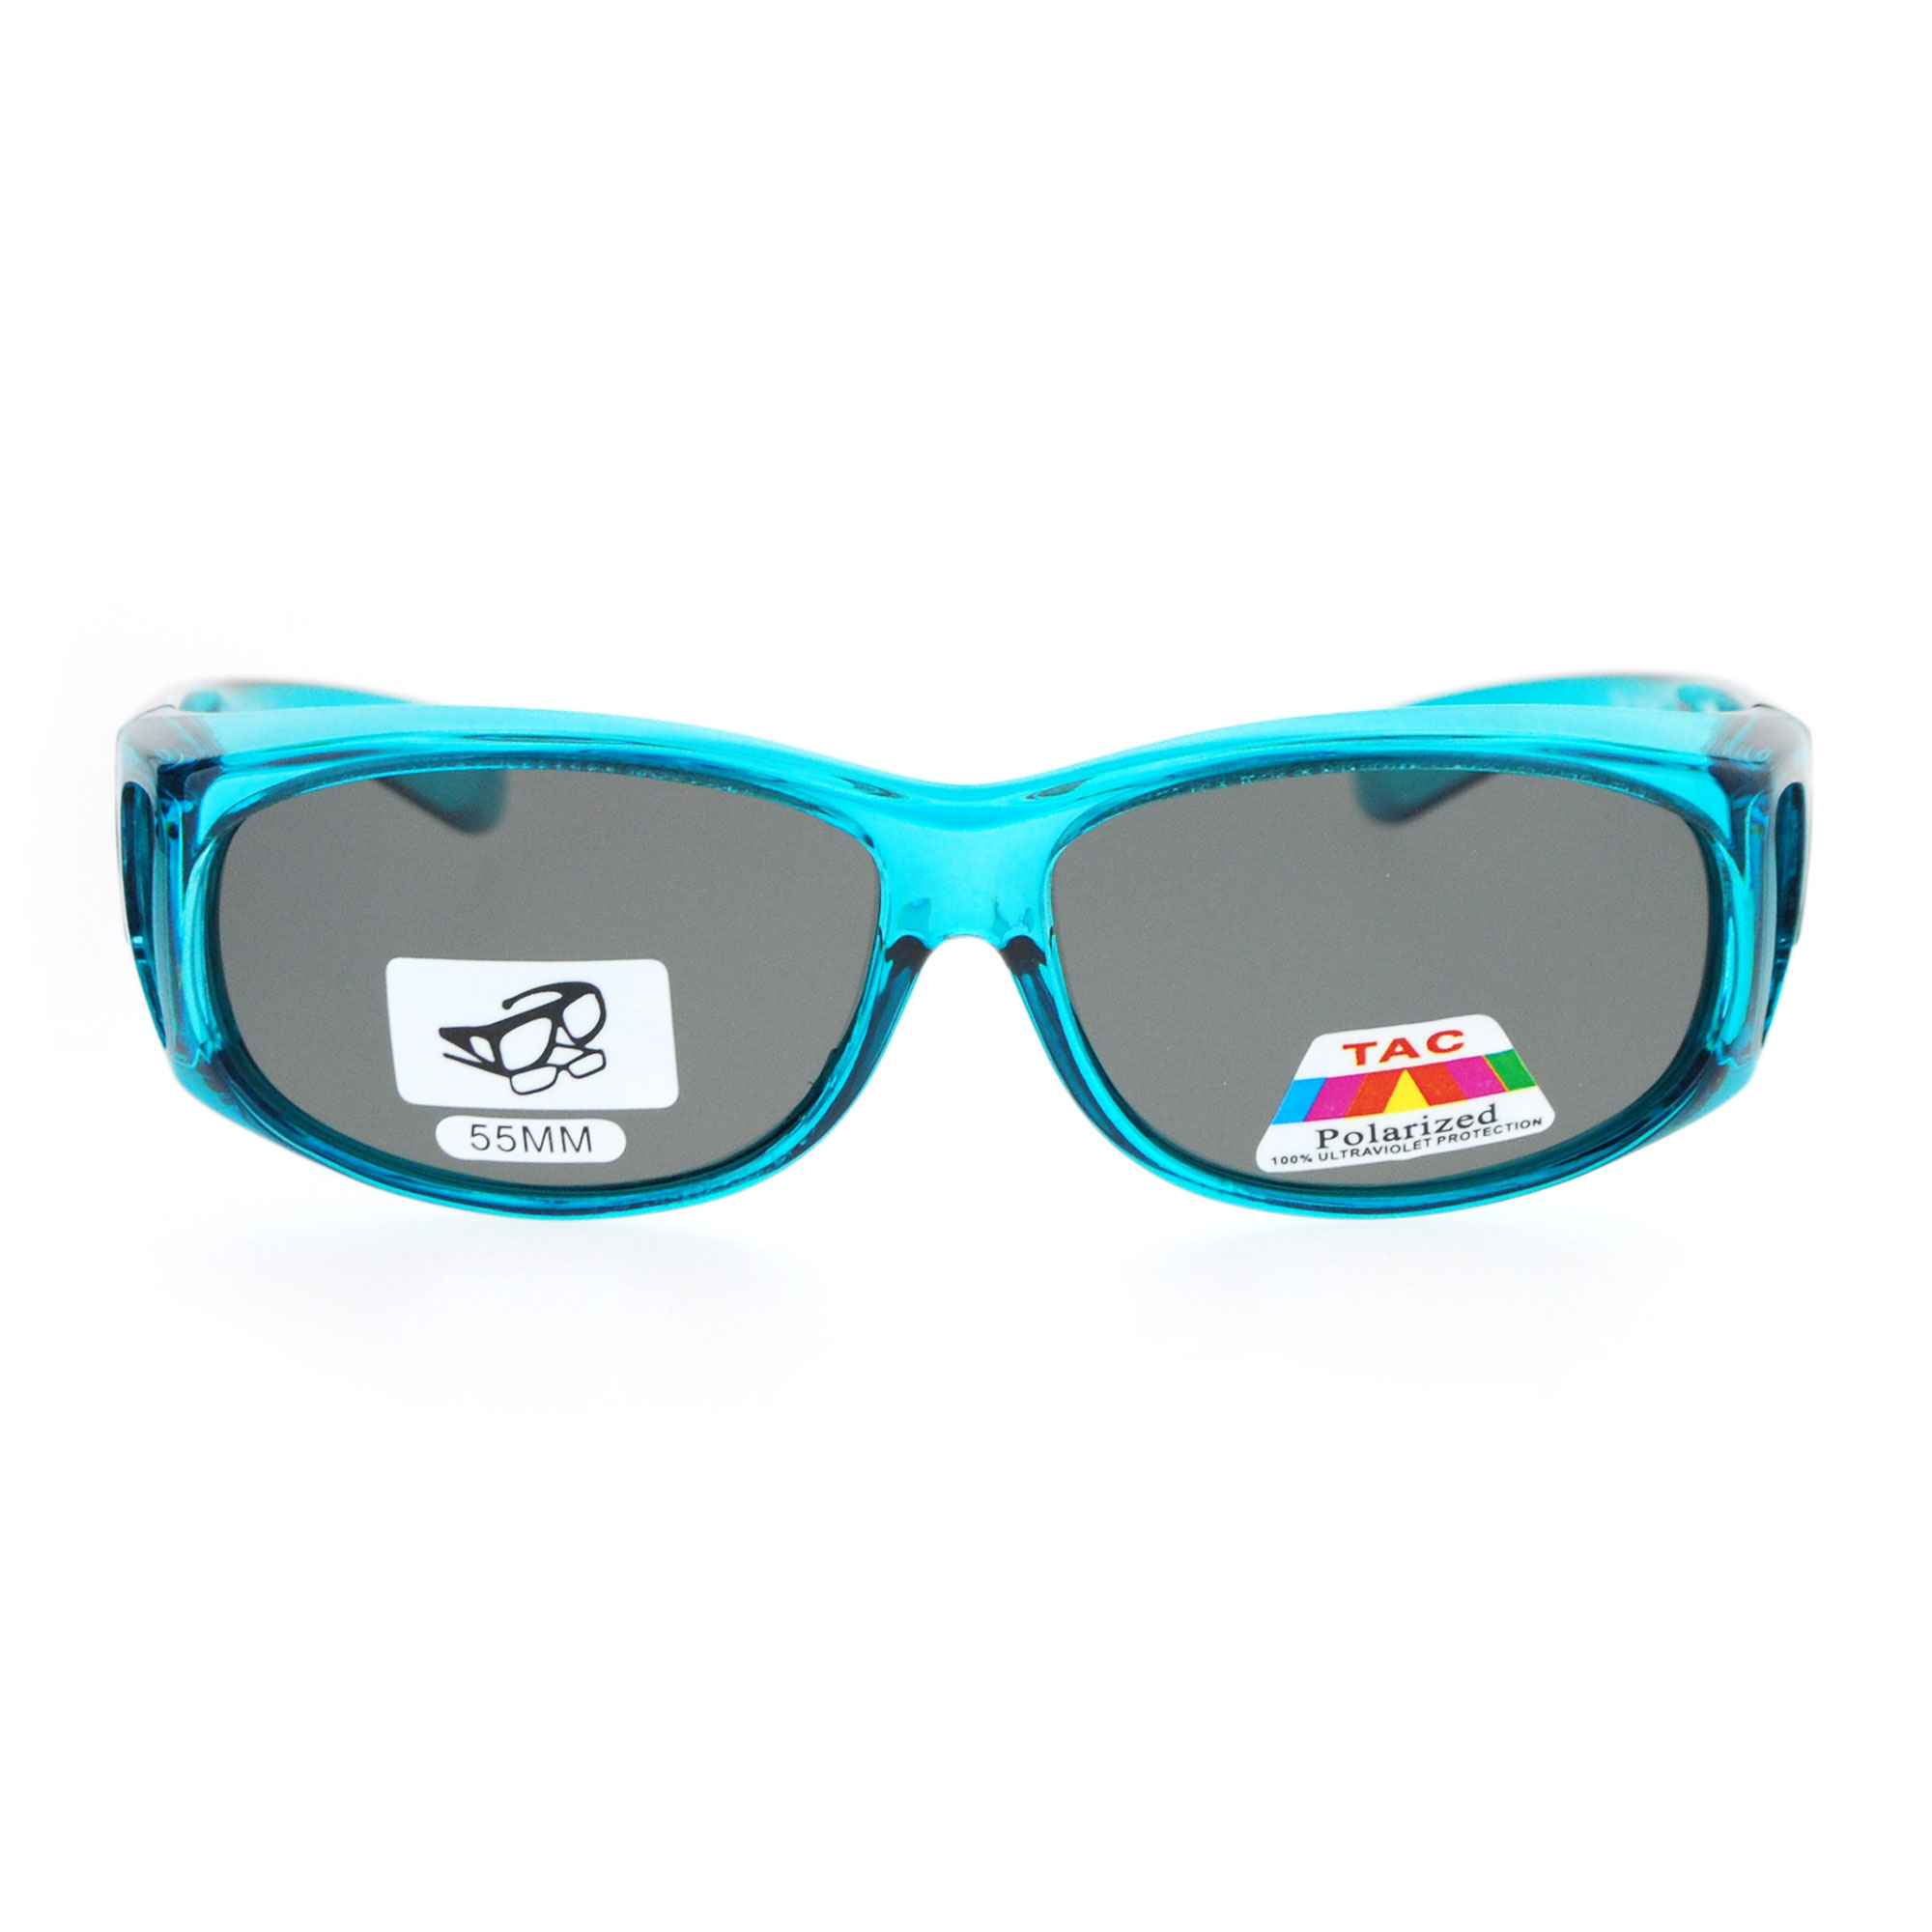 Polarized 55mm Rectangular Fit Over Plastic Sunglasses | eBay